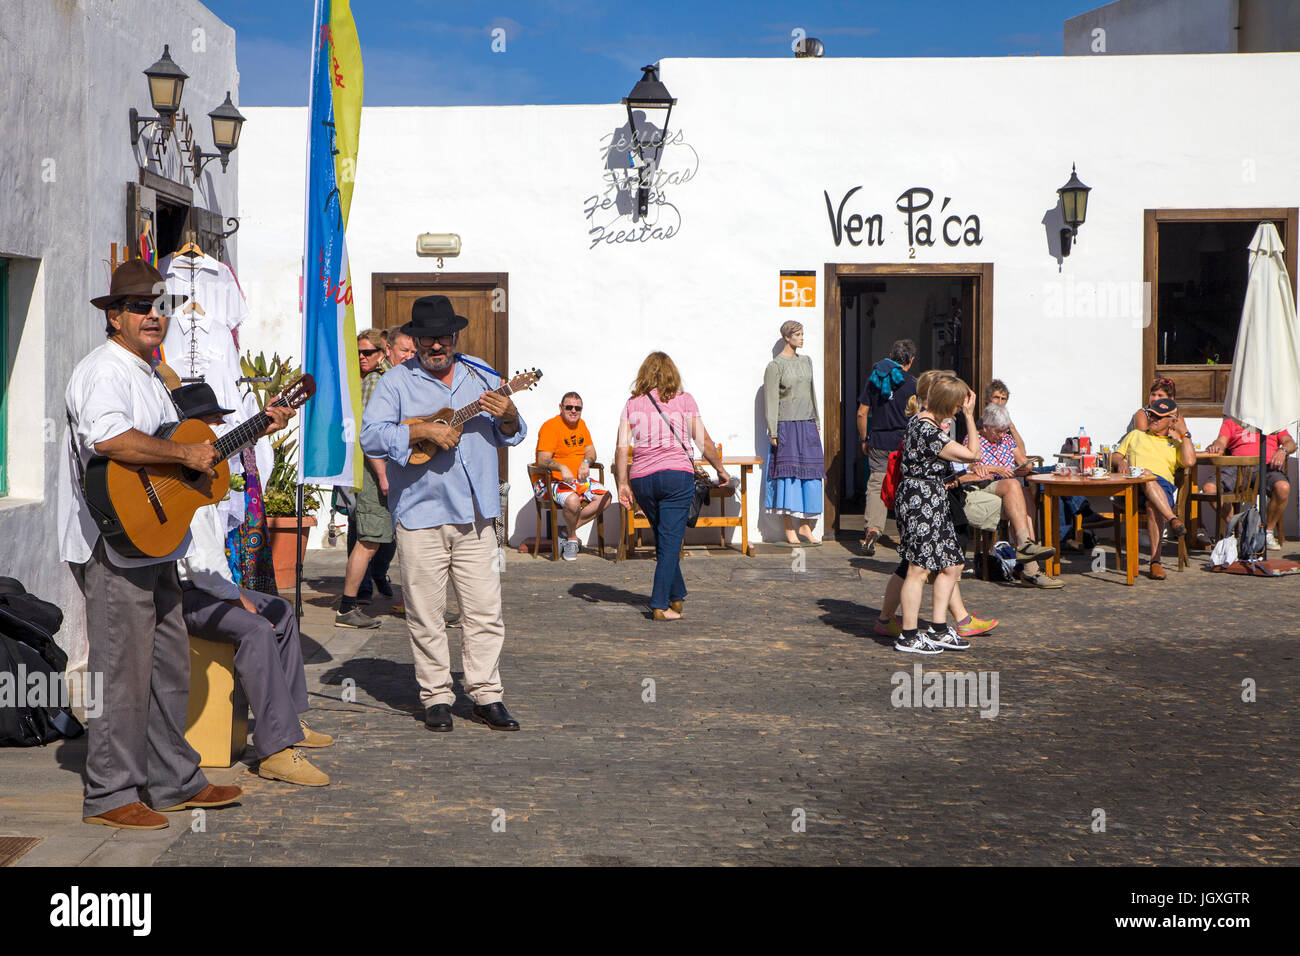 Strassenmusiker auf dem woechentlichen sonntagsmarkt in Teguise, Lanzarote, isole kanarische, europa | Musicisti di strada al settimanale mercato domenicale, tegui Foto Stock